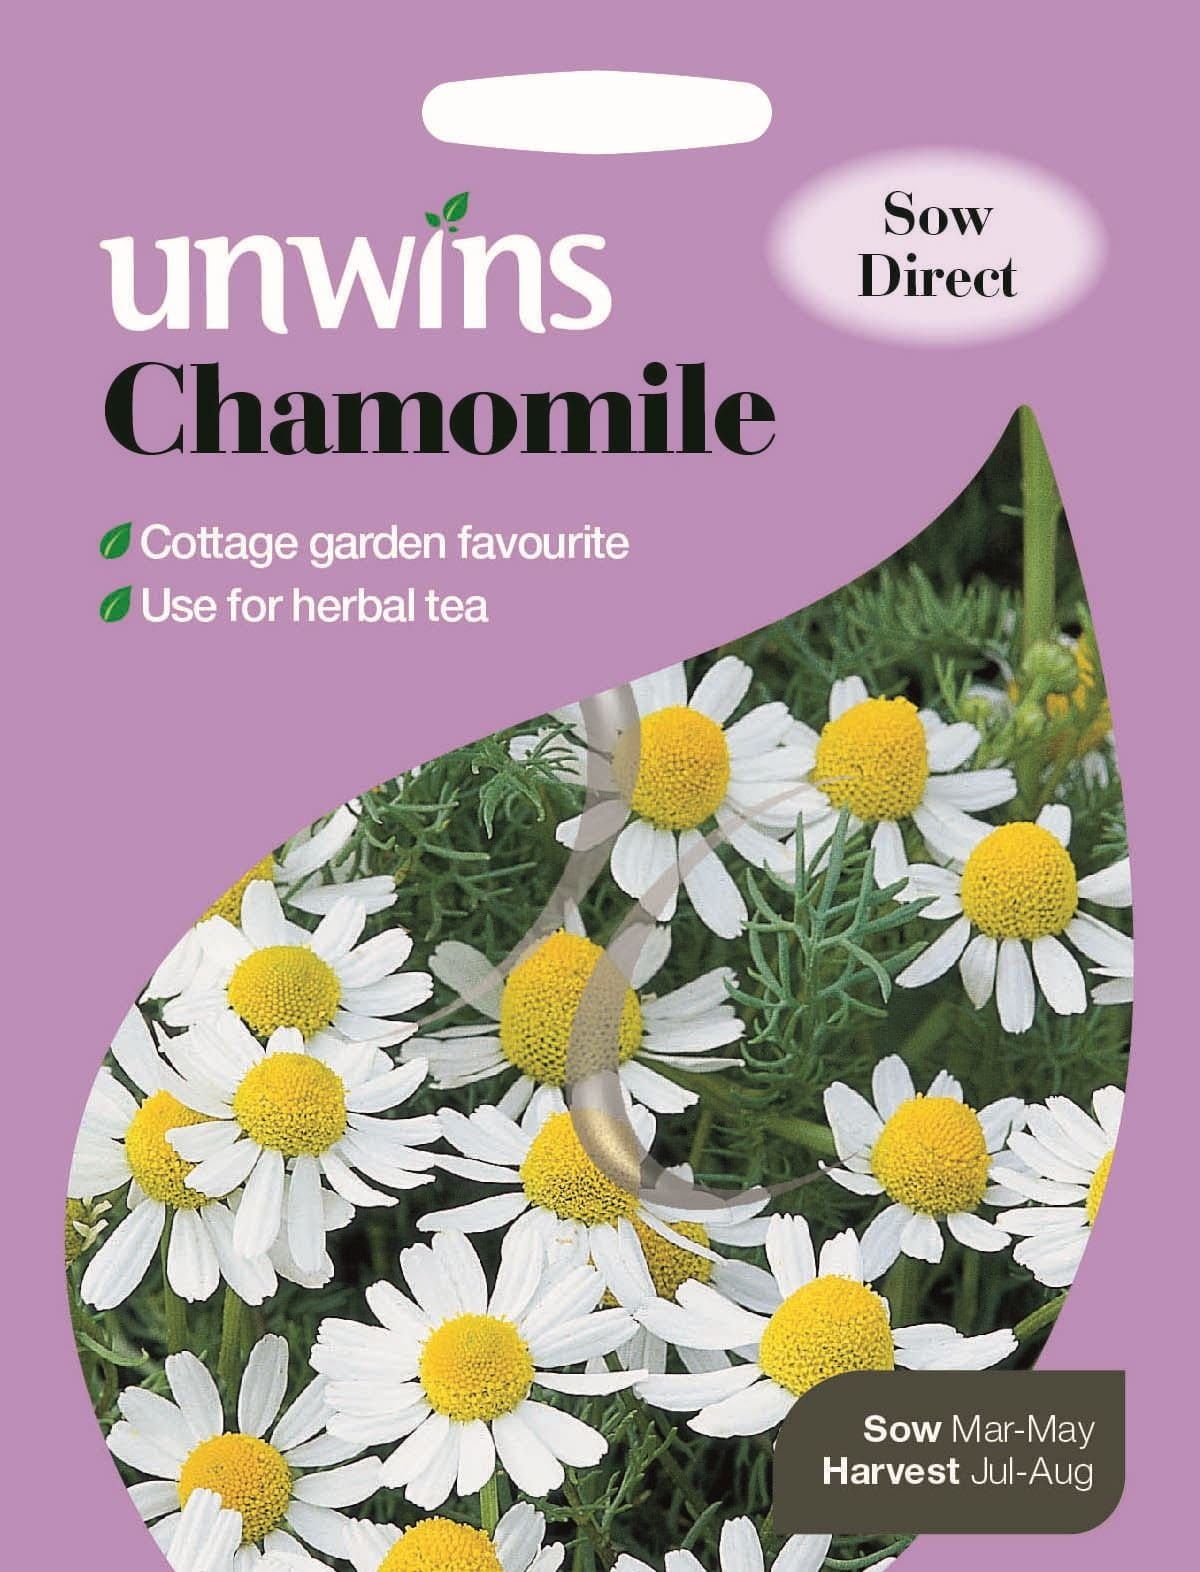 Unwins Chamomile 700 Seeds